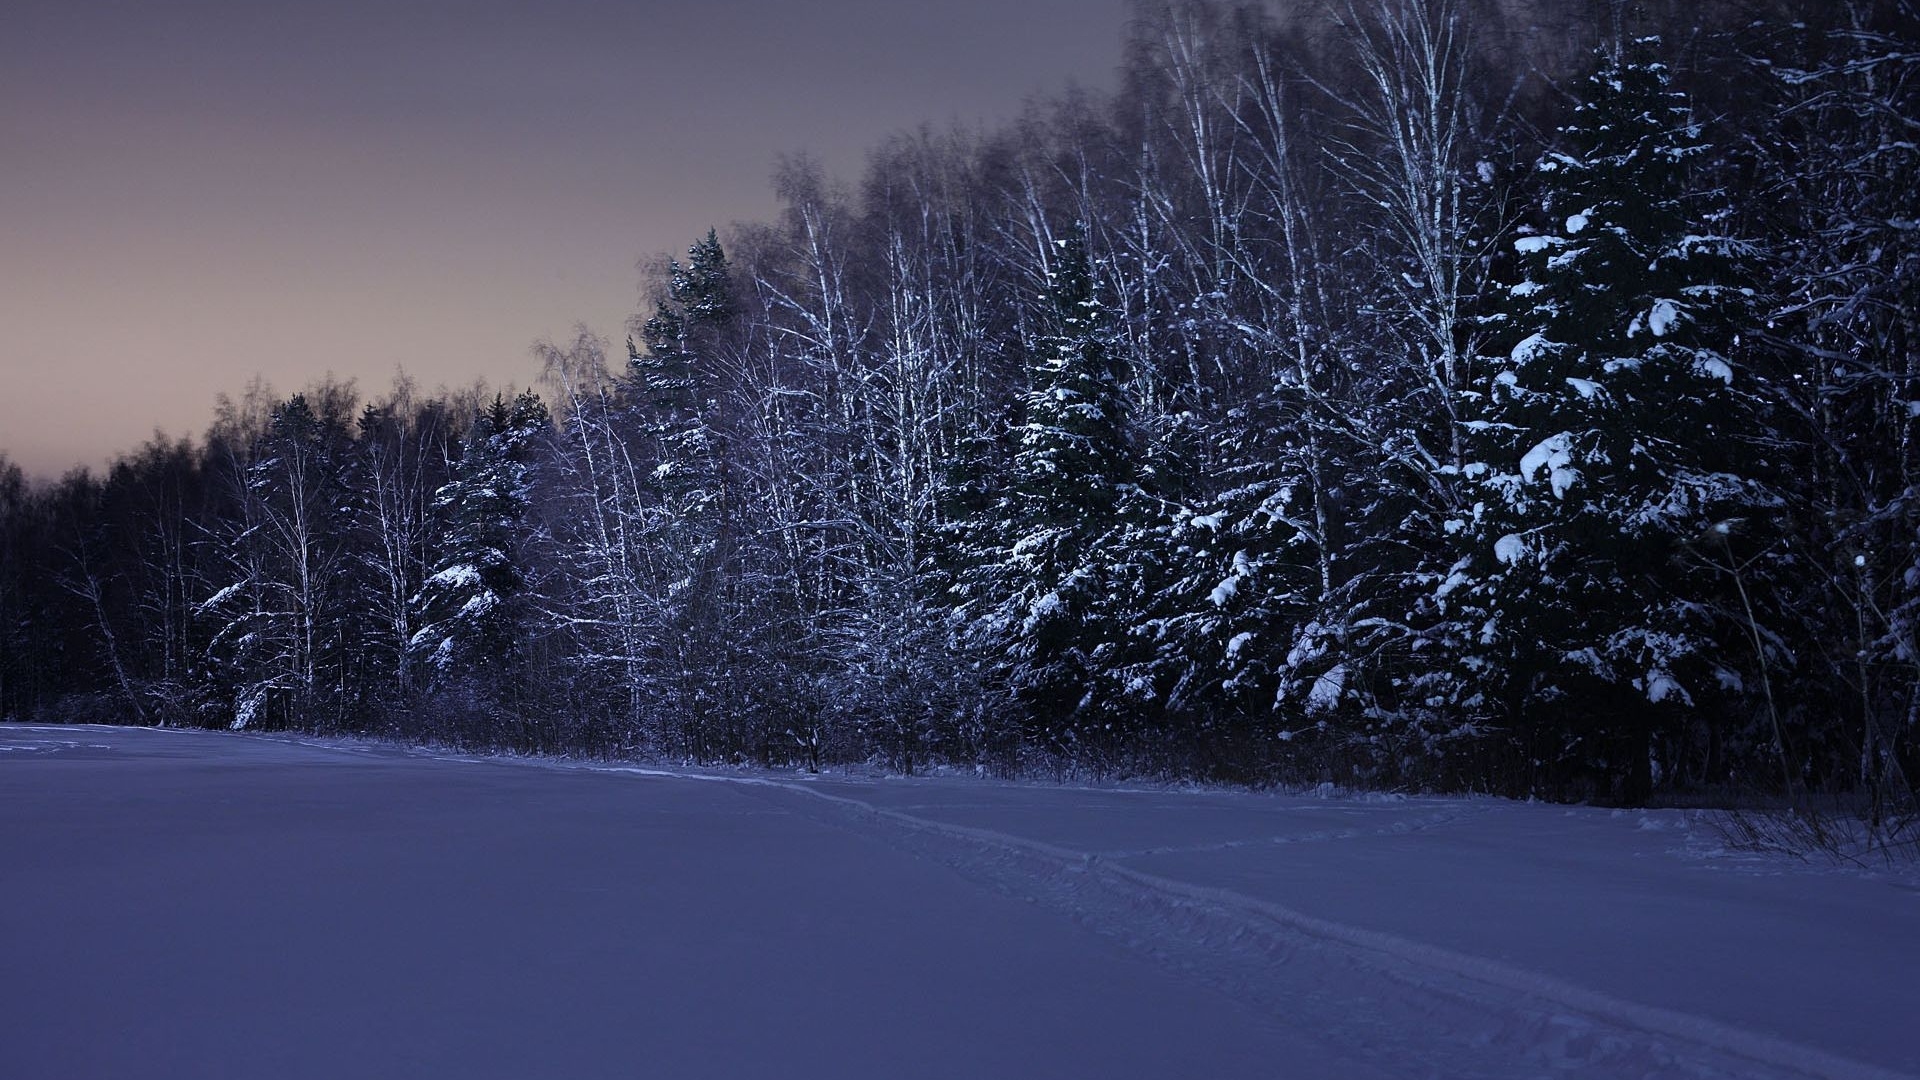 Night Winter Landscape Wallpapers